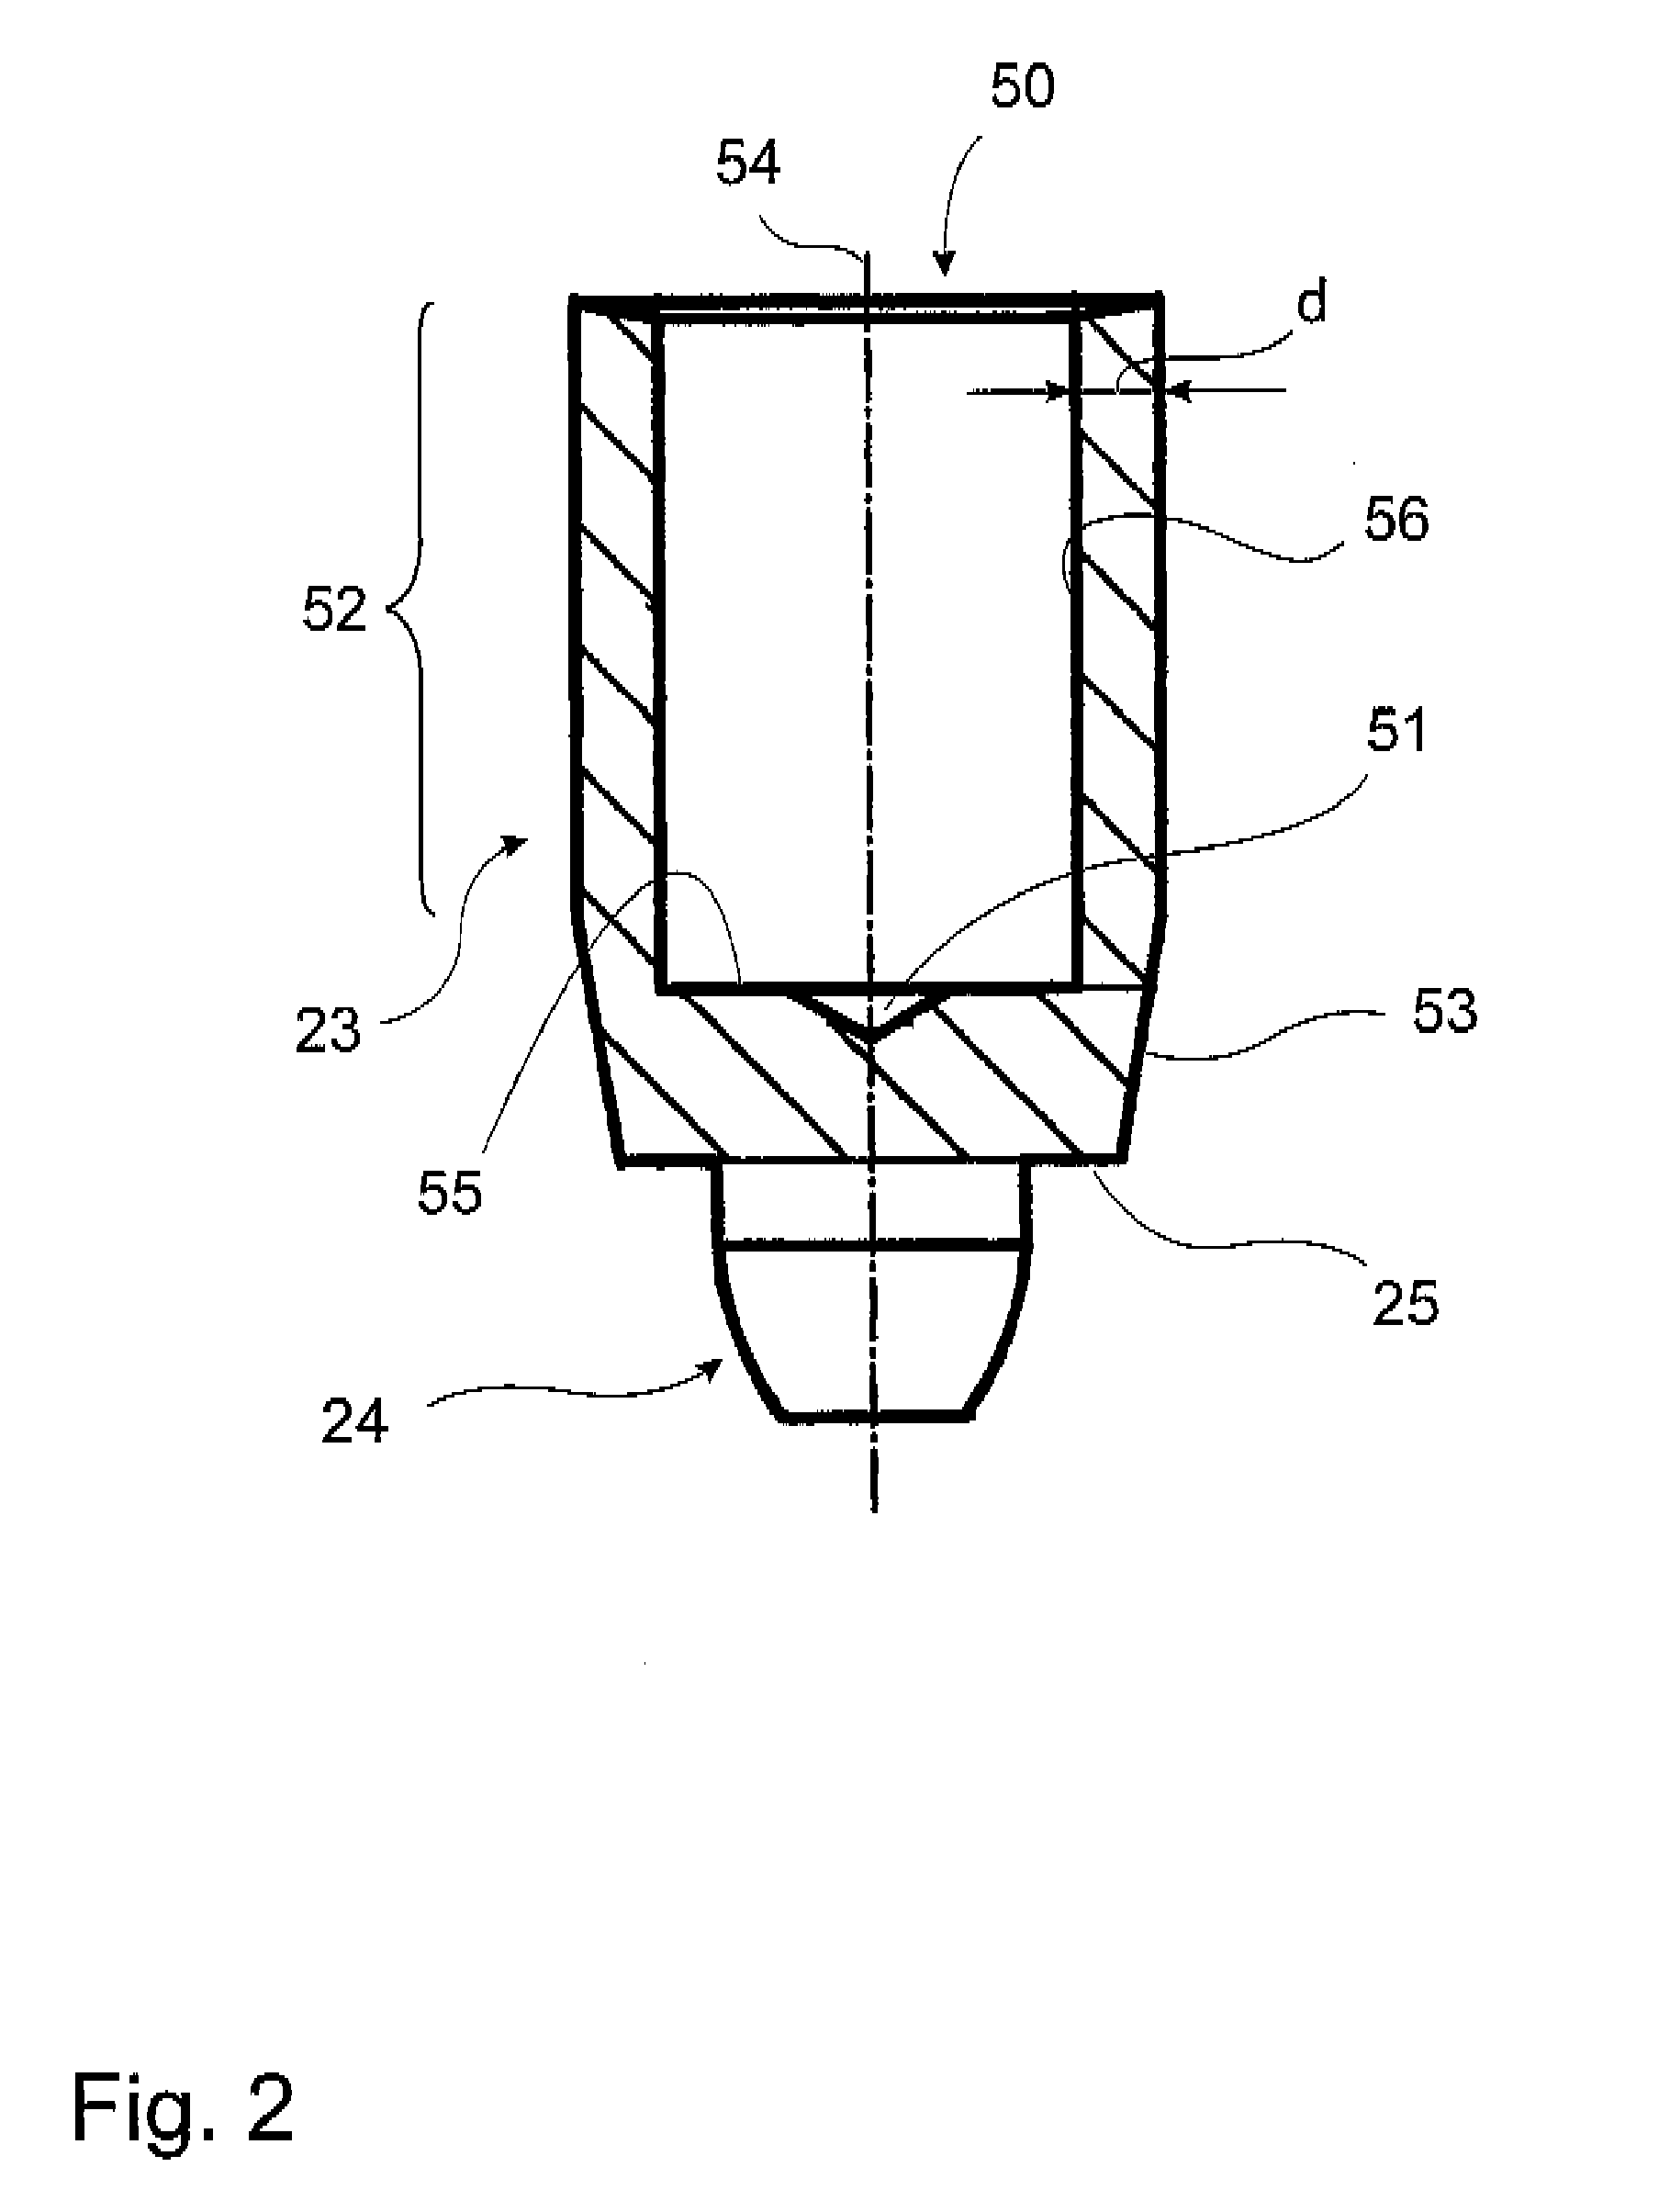 Electromagnet with adjusting screw